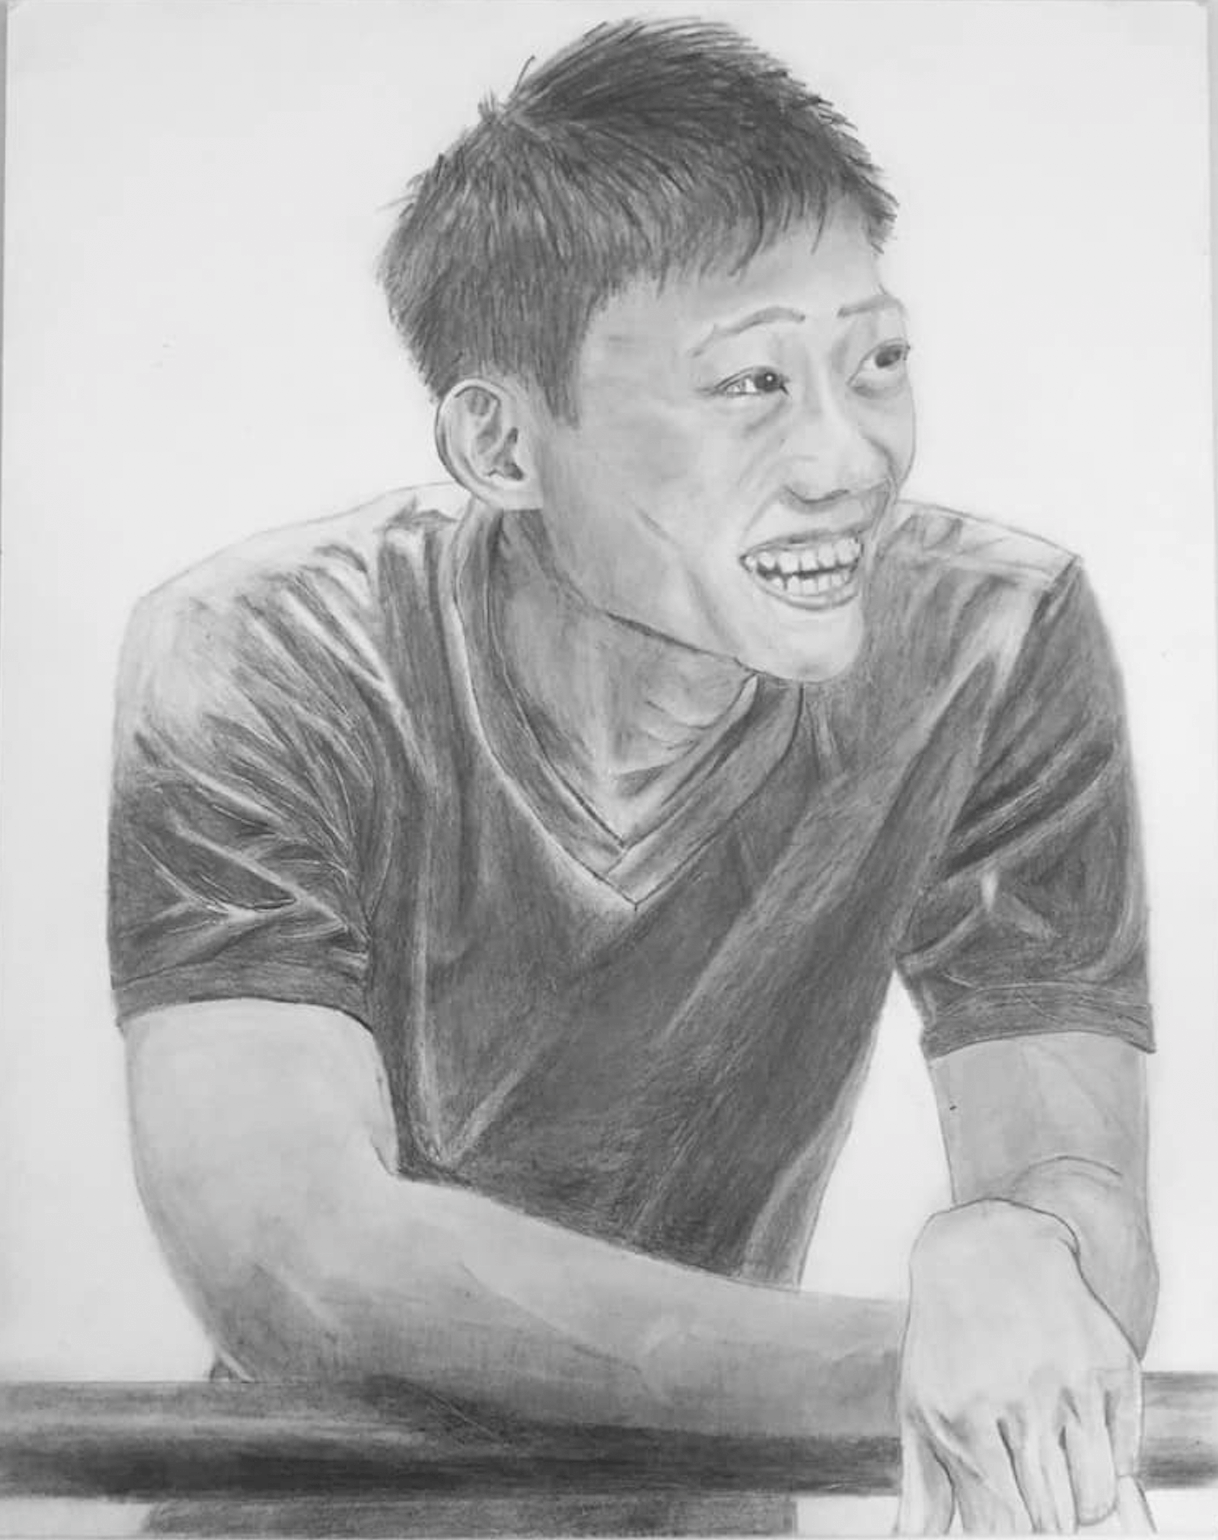 A Portait of a Boy by Michelle Lim